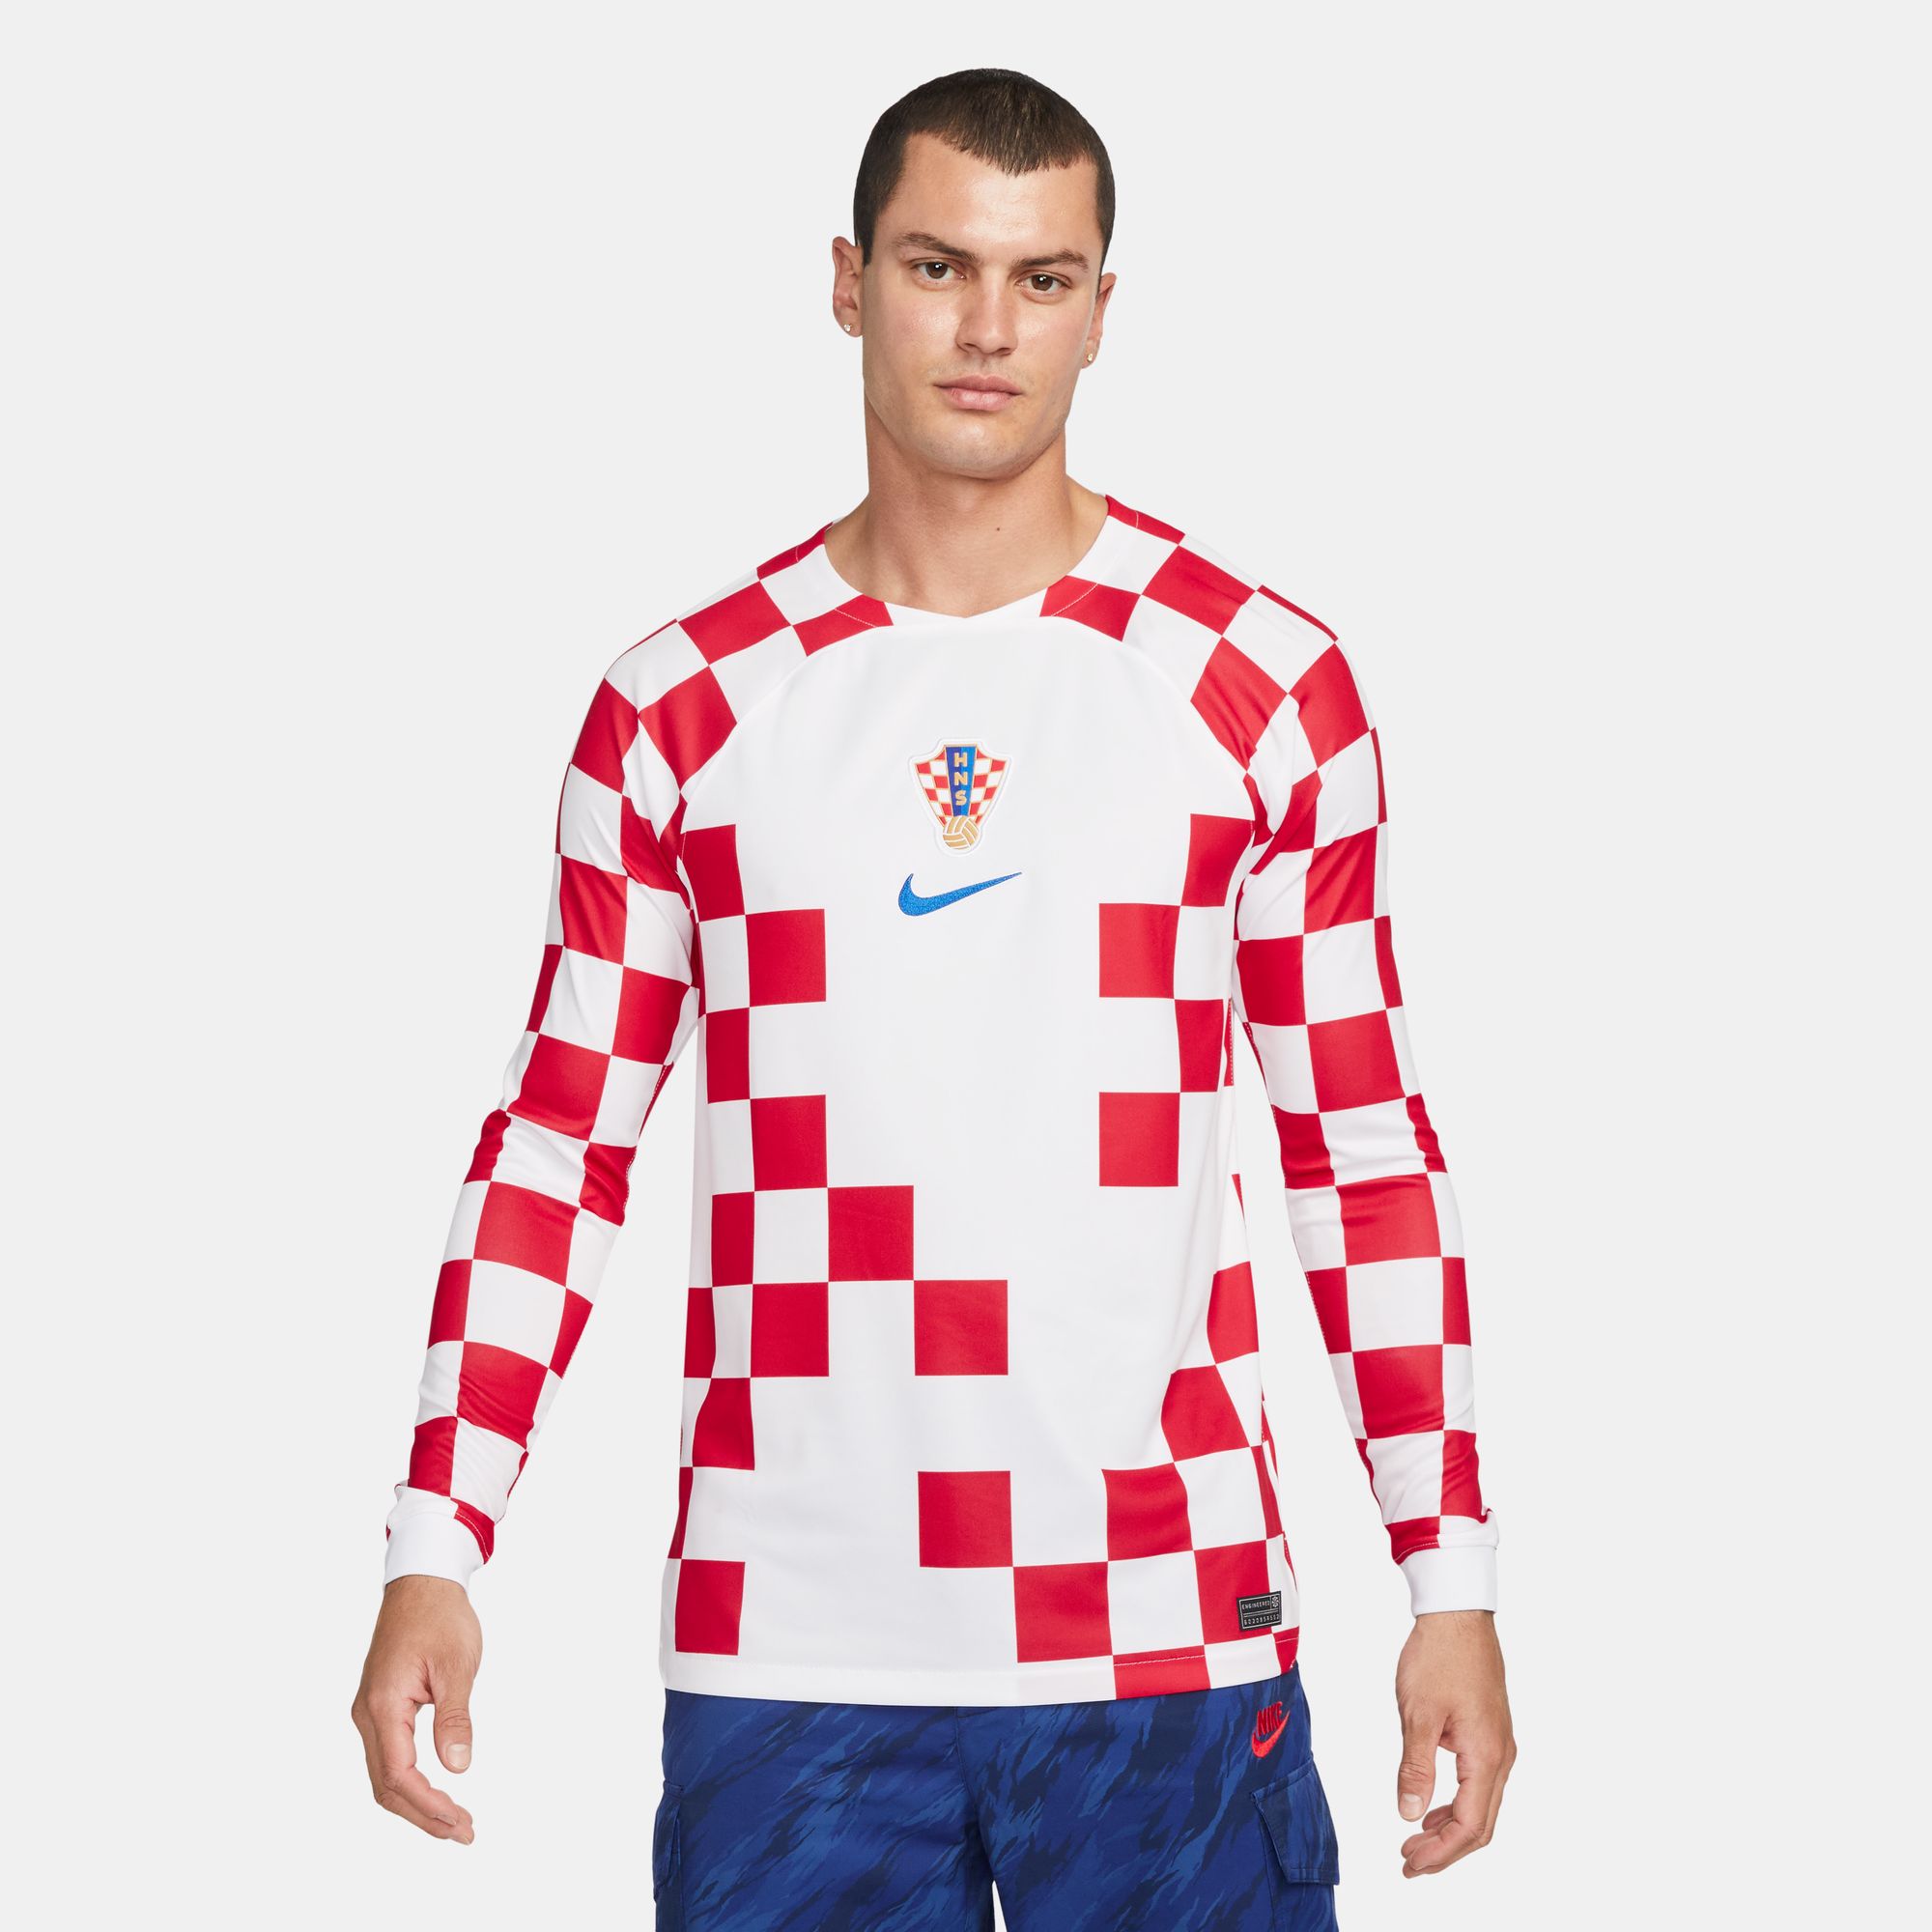 croatia national team kit